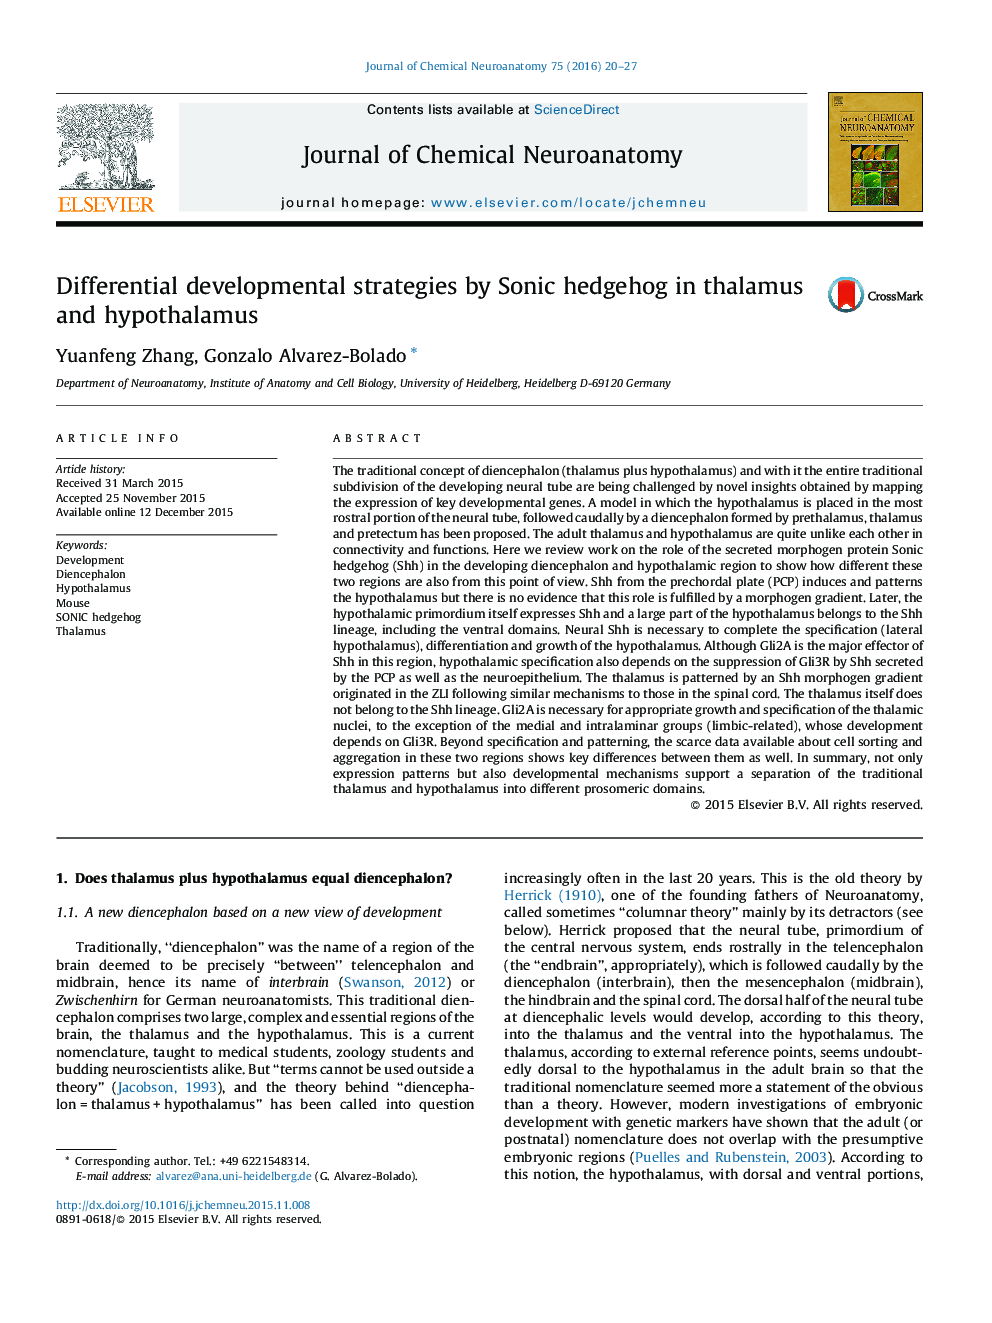 Differential developmental strategies by Sonic hedgehog in thalamus and hypothalamus